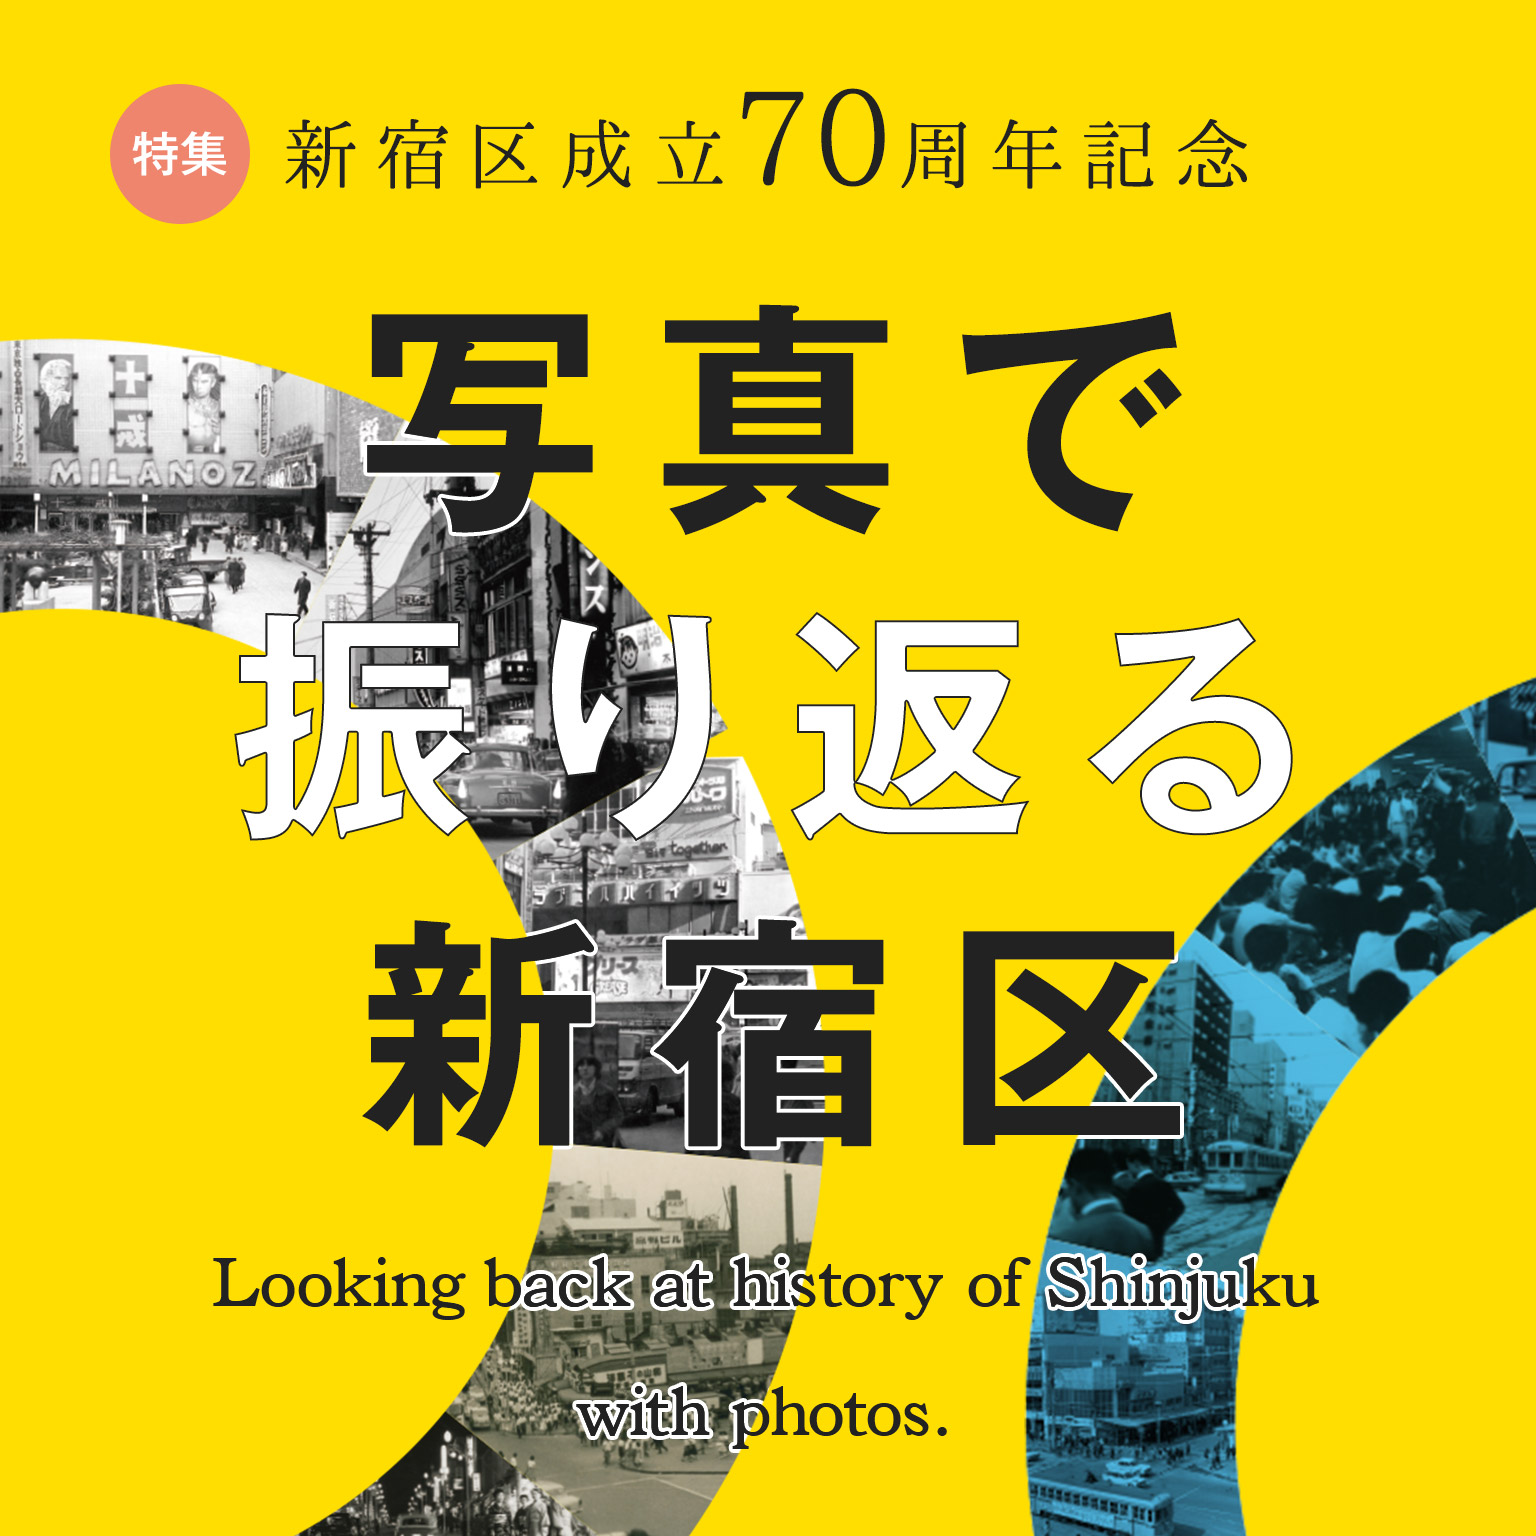 特集 新宿区成立70周年記念 写真で振り返る新宿区